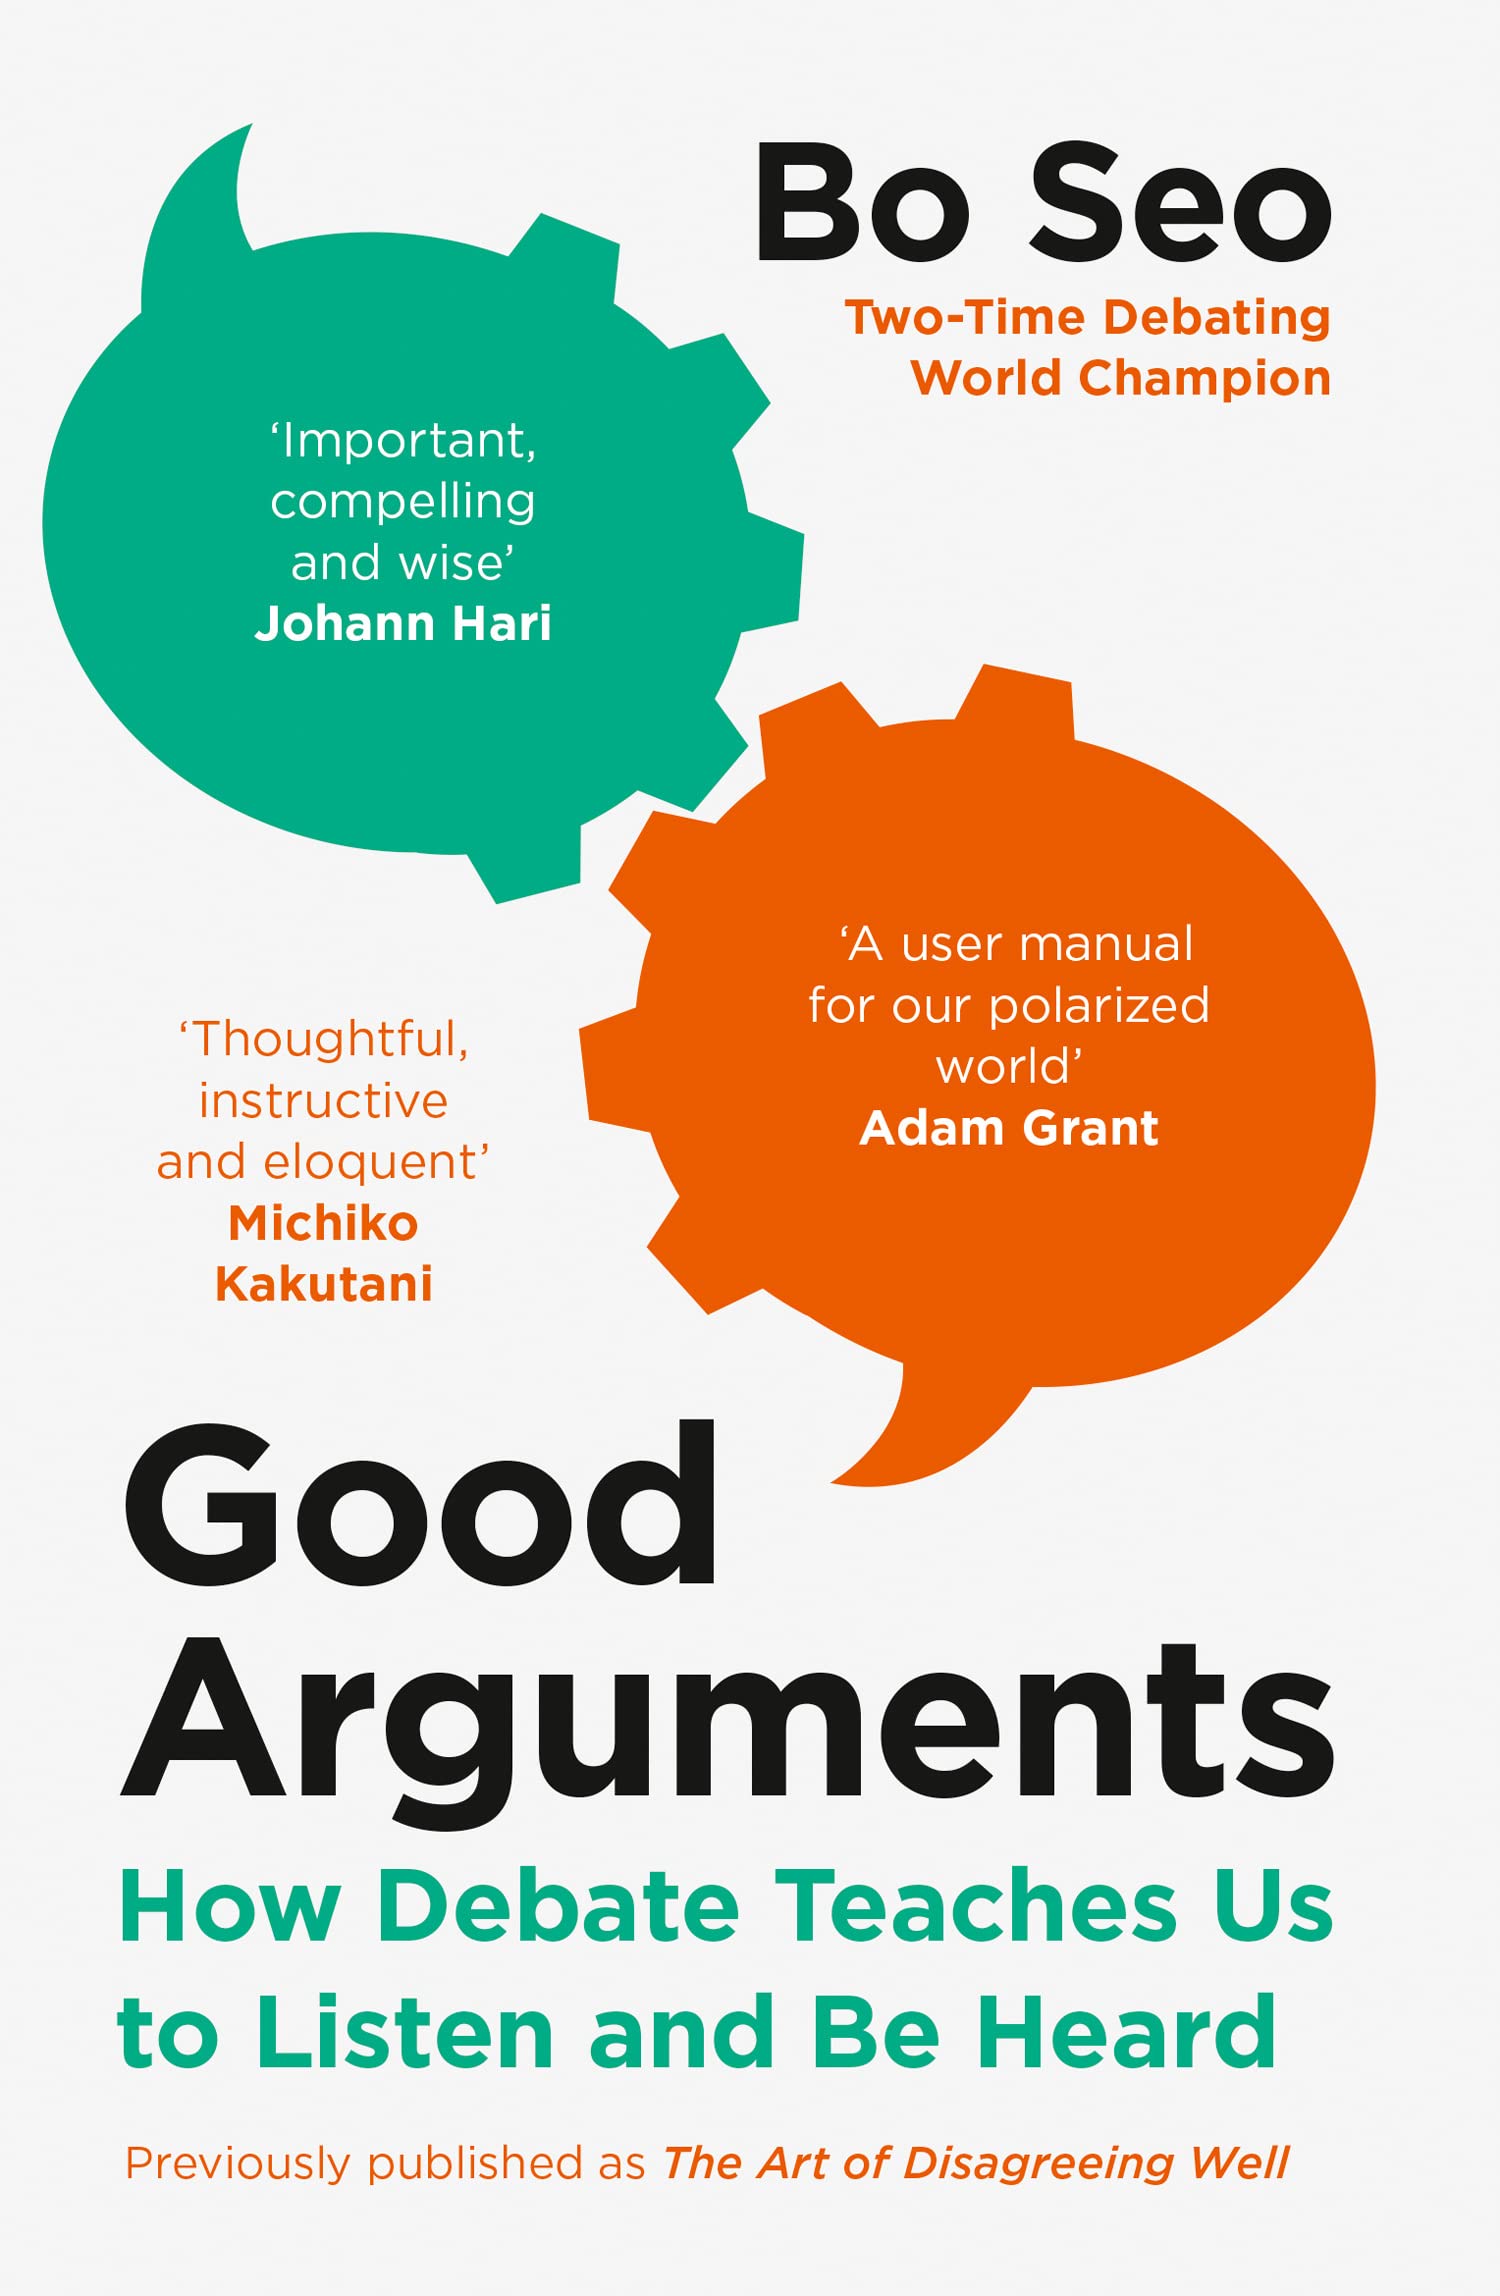 Good Arguments | Bo Seo